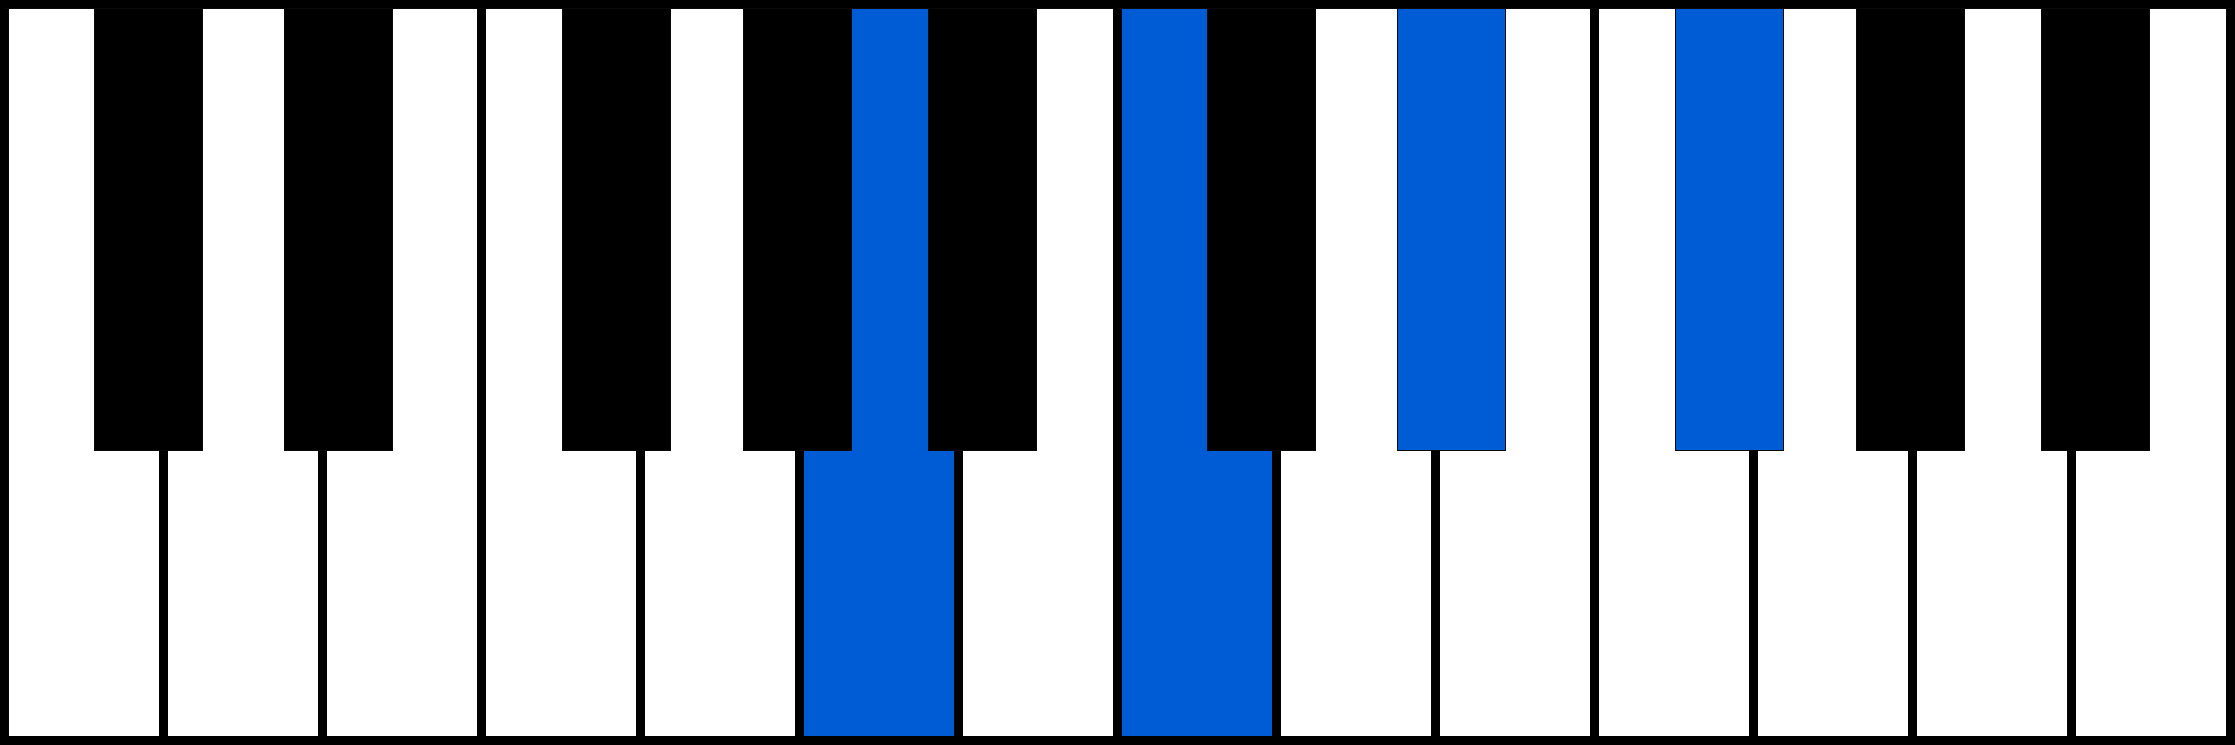 Adim7 piano chord fingering